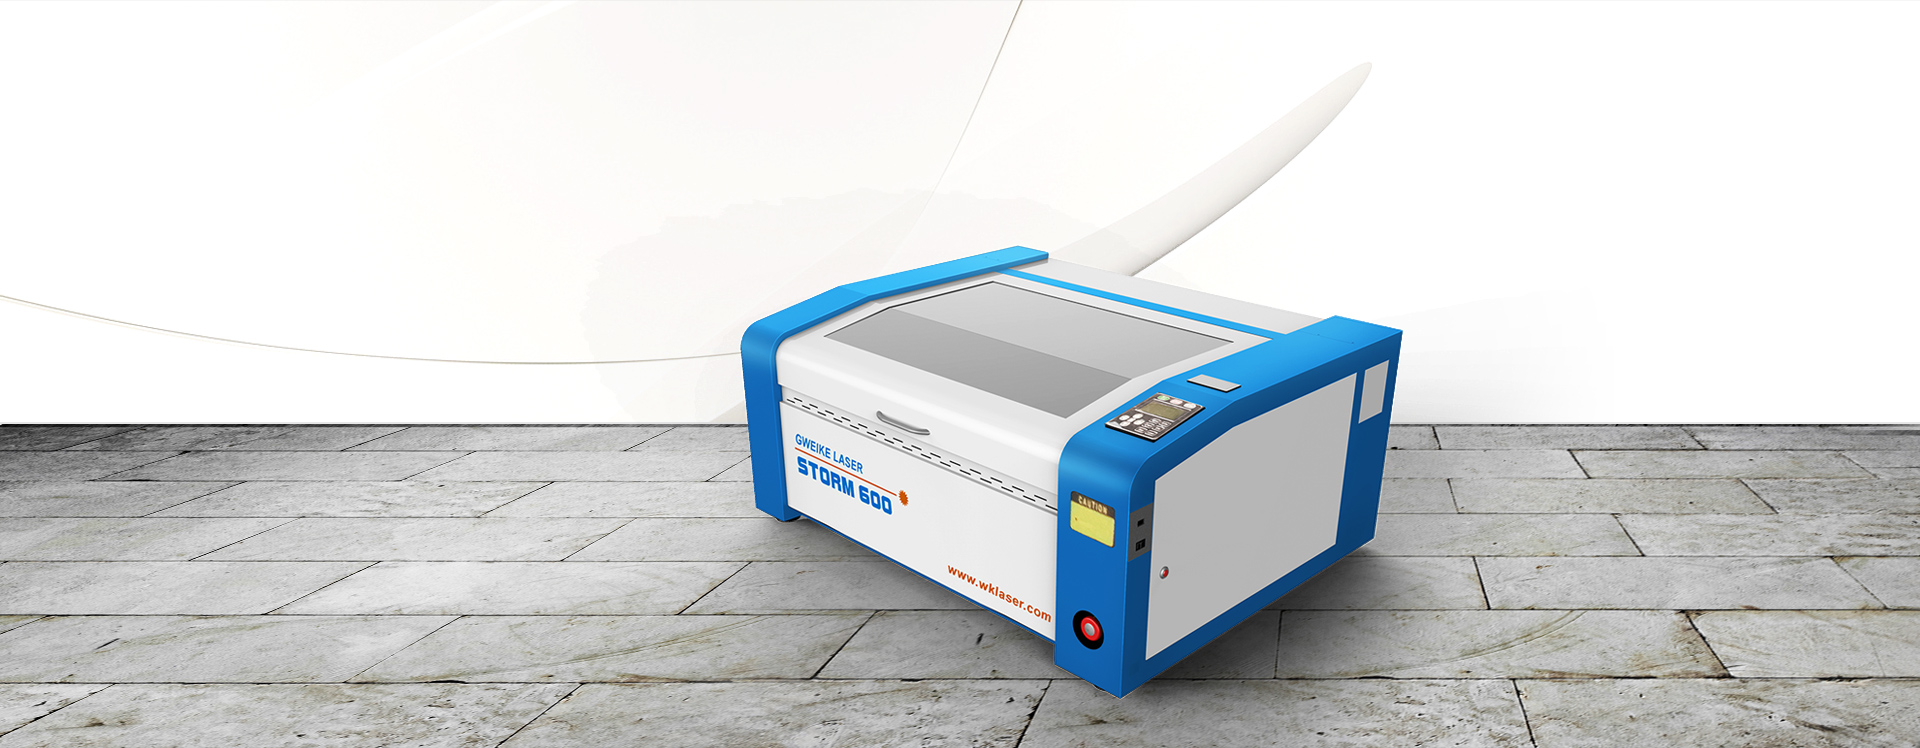 STORM600 CO2 Laser Cutting Machine